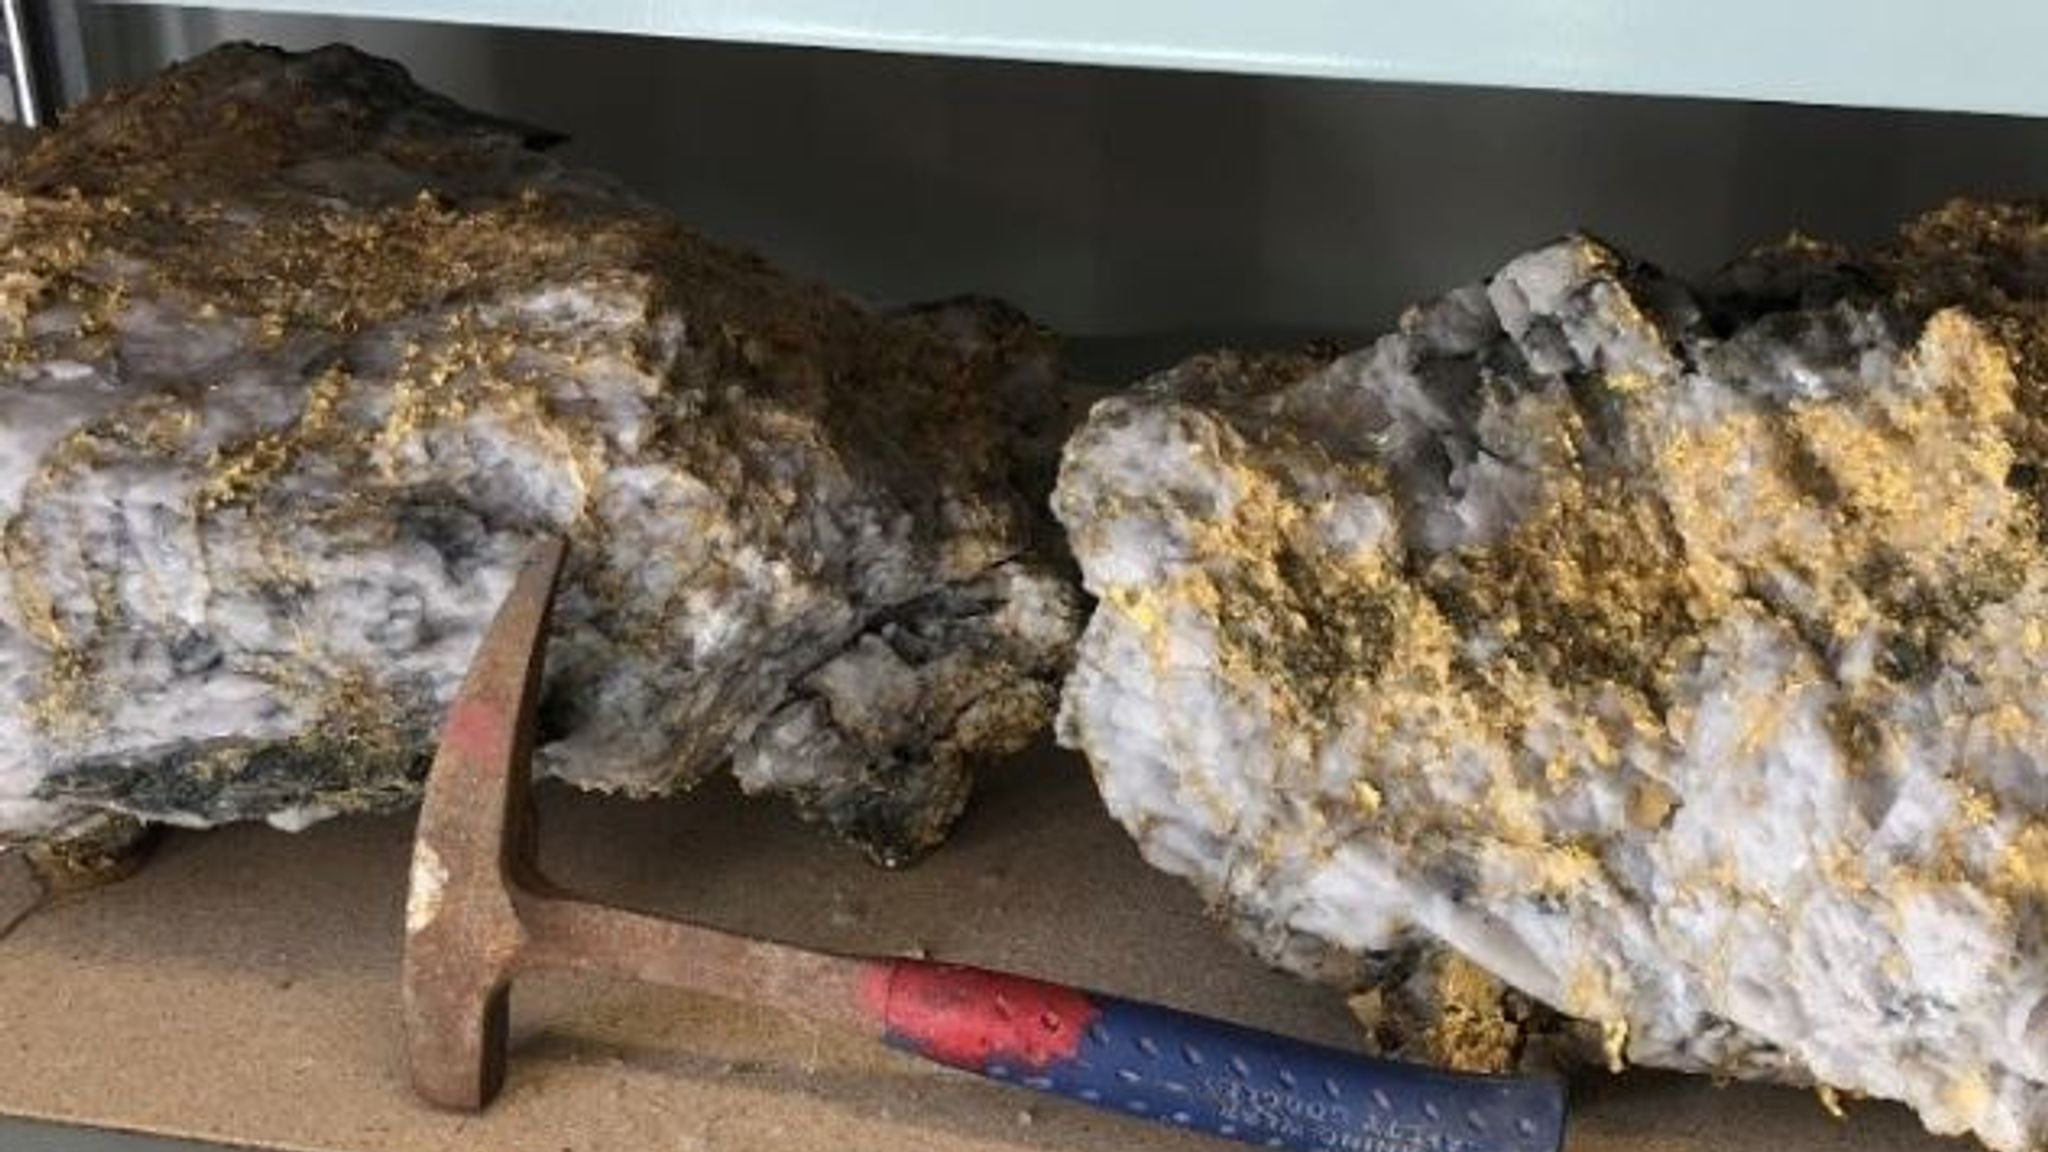 Massive gold-encrusted rocks worth millions found in Australia - World ...